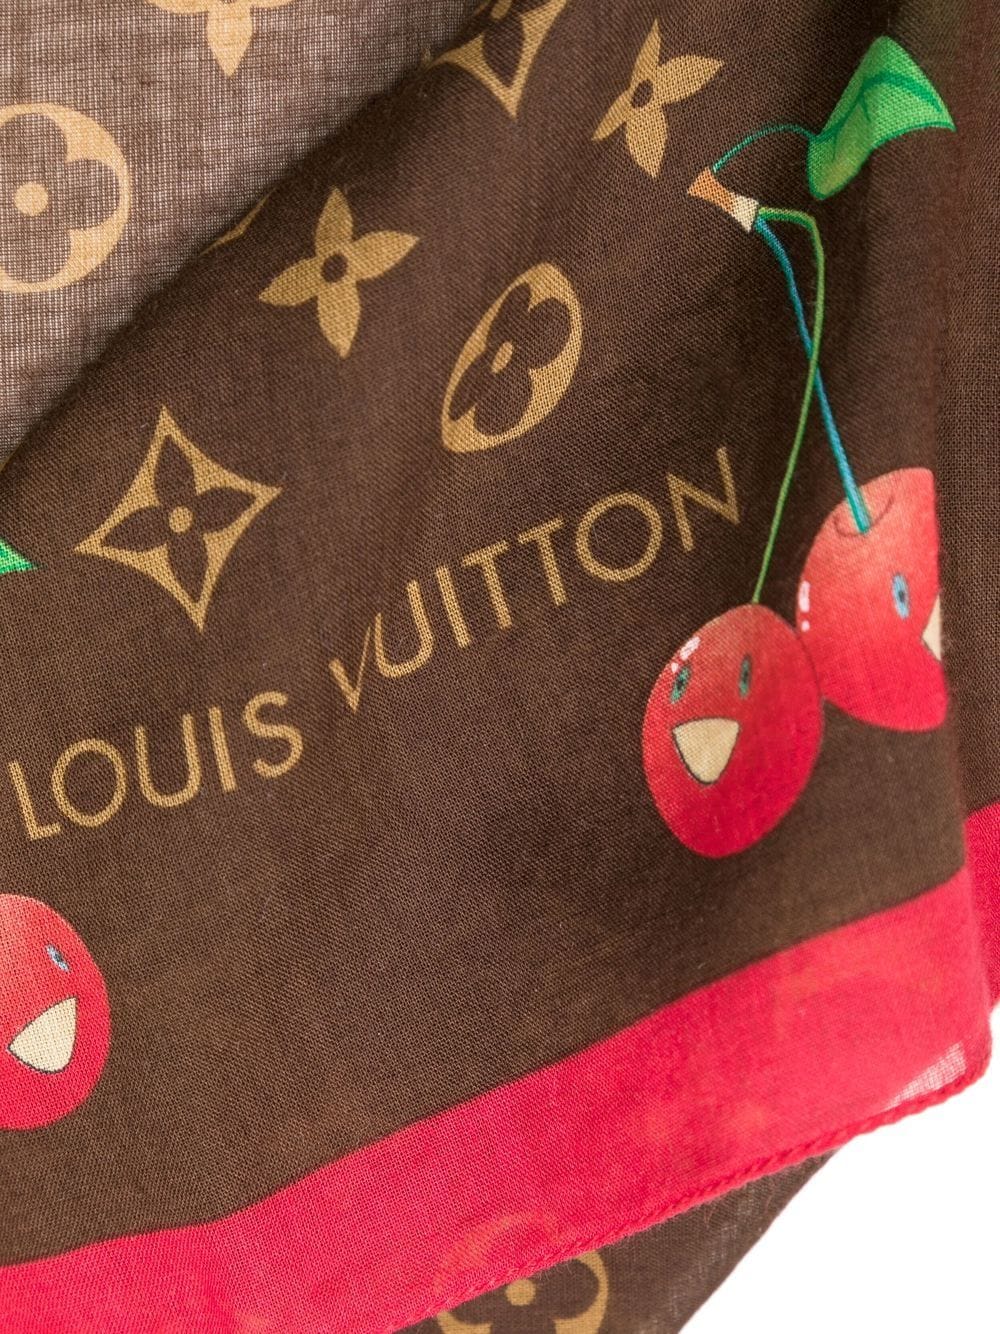 Louis Vuitton 1990-2000 Monogram Scarf - Brown